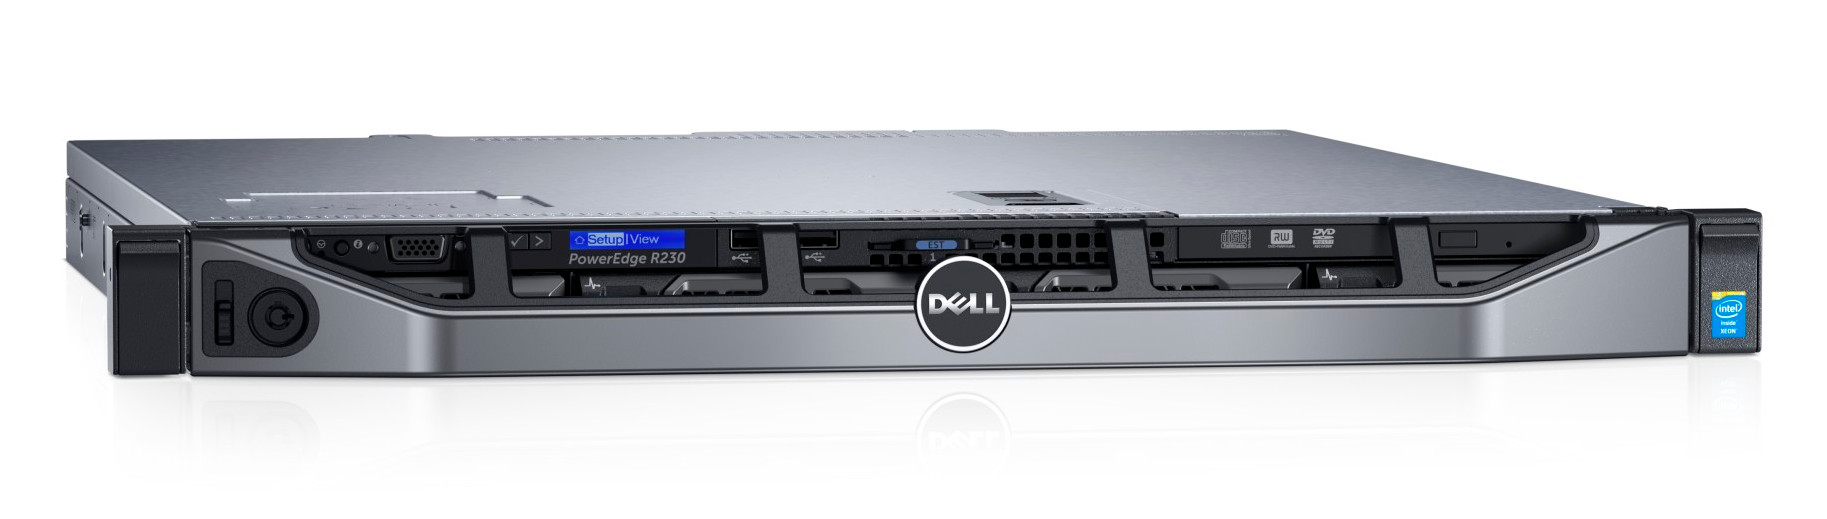 Сервер Dell PowerEdge R230, E3-1220v6 (3.5GHz, 4C), 8GB (1x8GB) UDIMM, (1)*1TB SATA 7.2k (up to 4x3.5"), PERC H330, DVD+/-RW, Broadcom 5720 DP 1Gb LOM